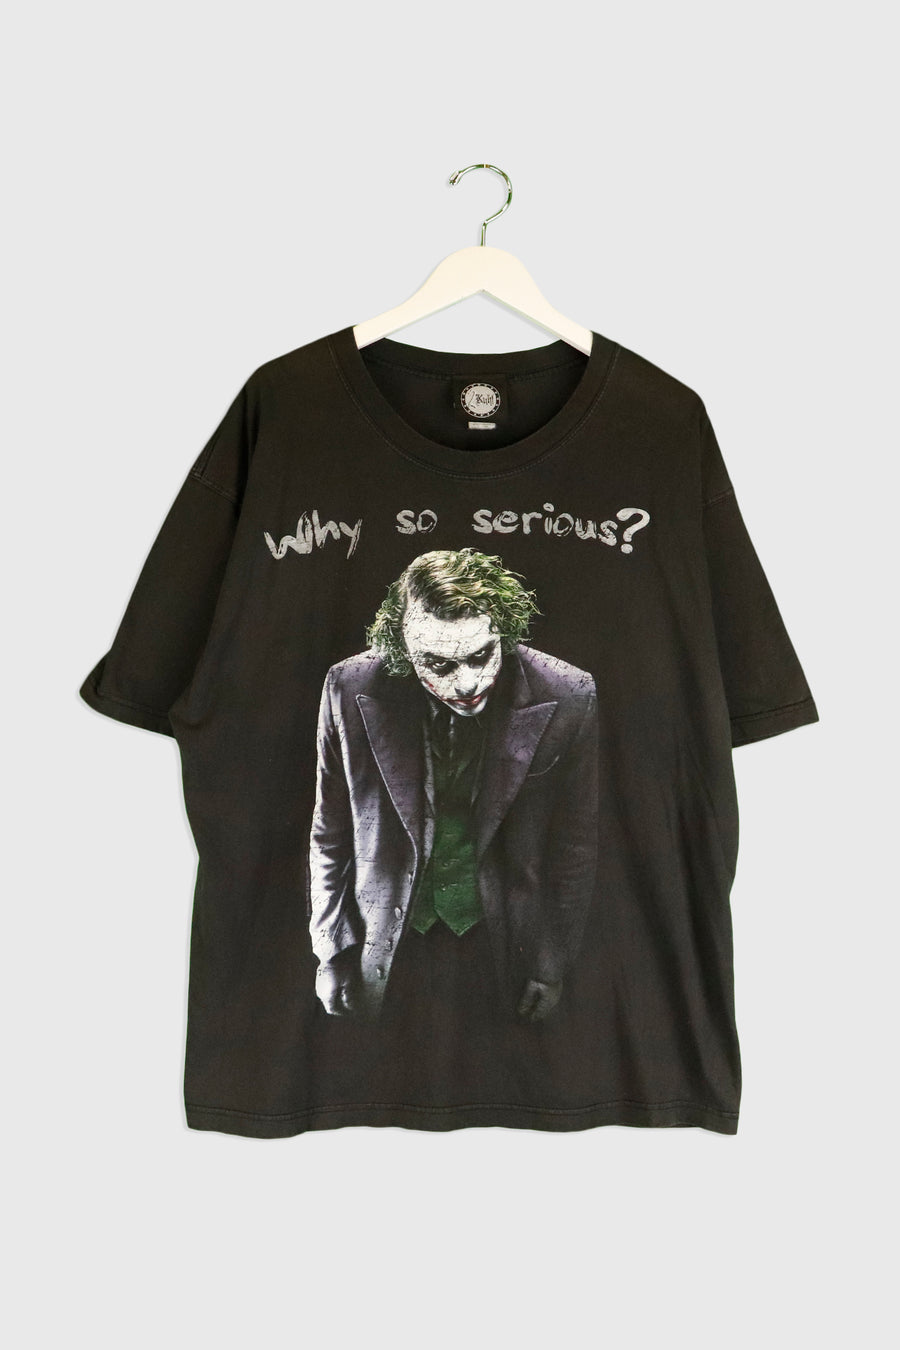 Vintage Dark Knight Joker Why So Serious Graphic T Shirt Sz XL